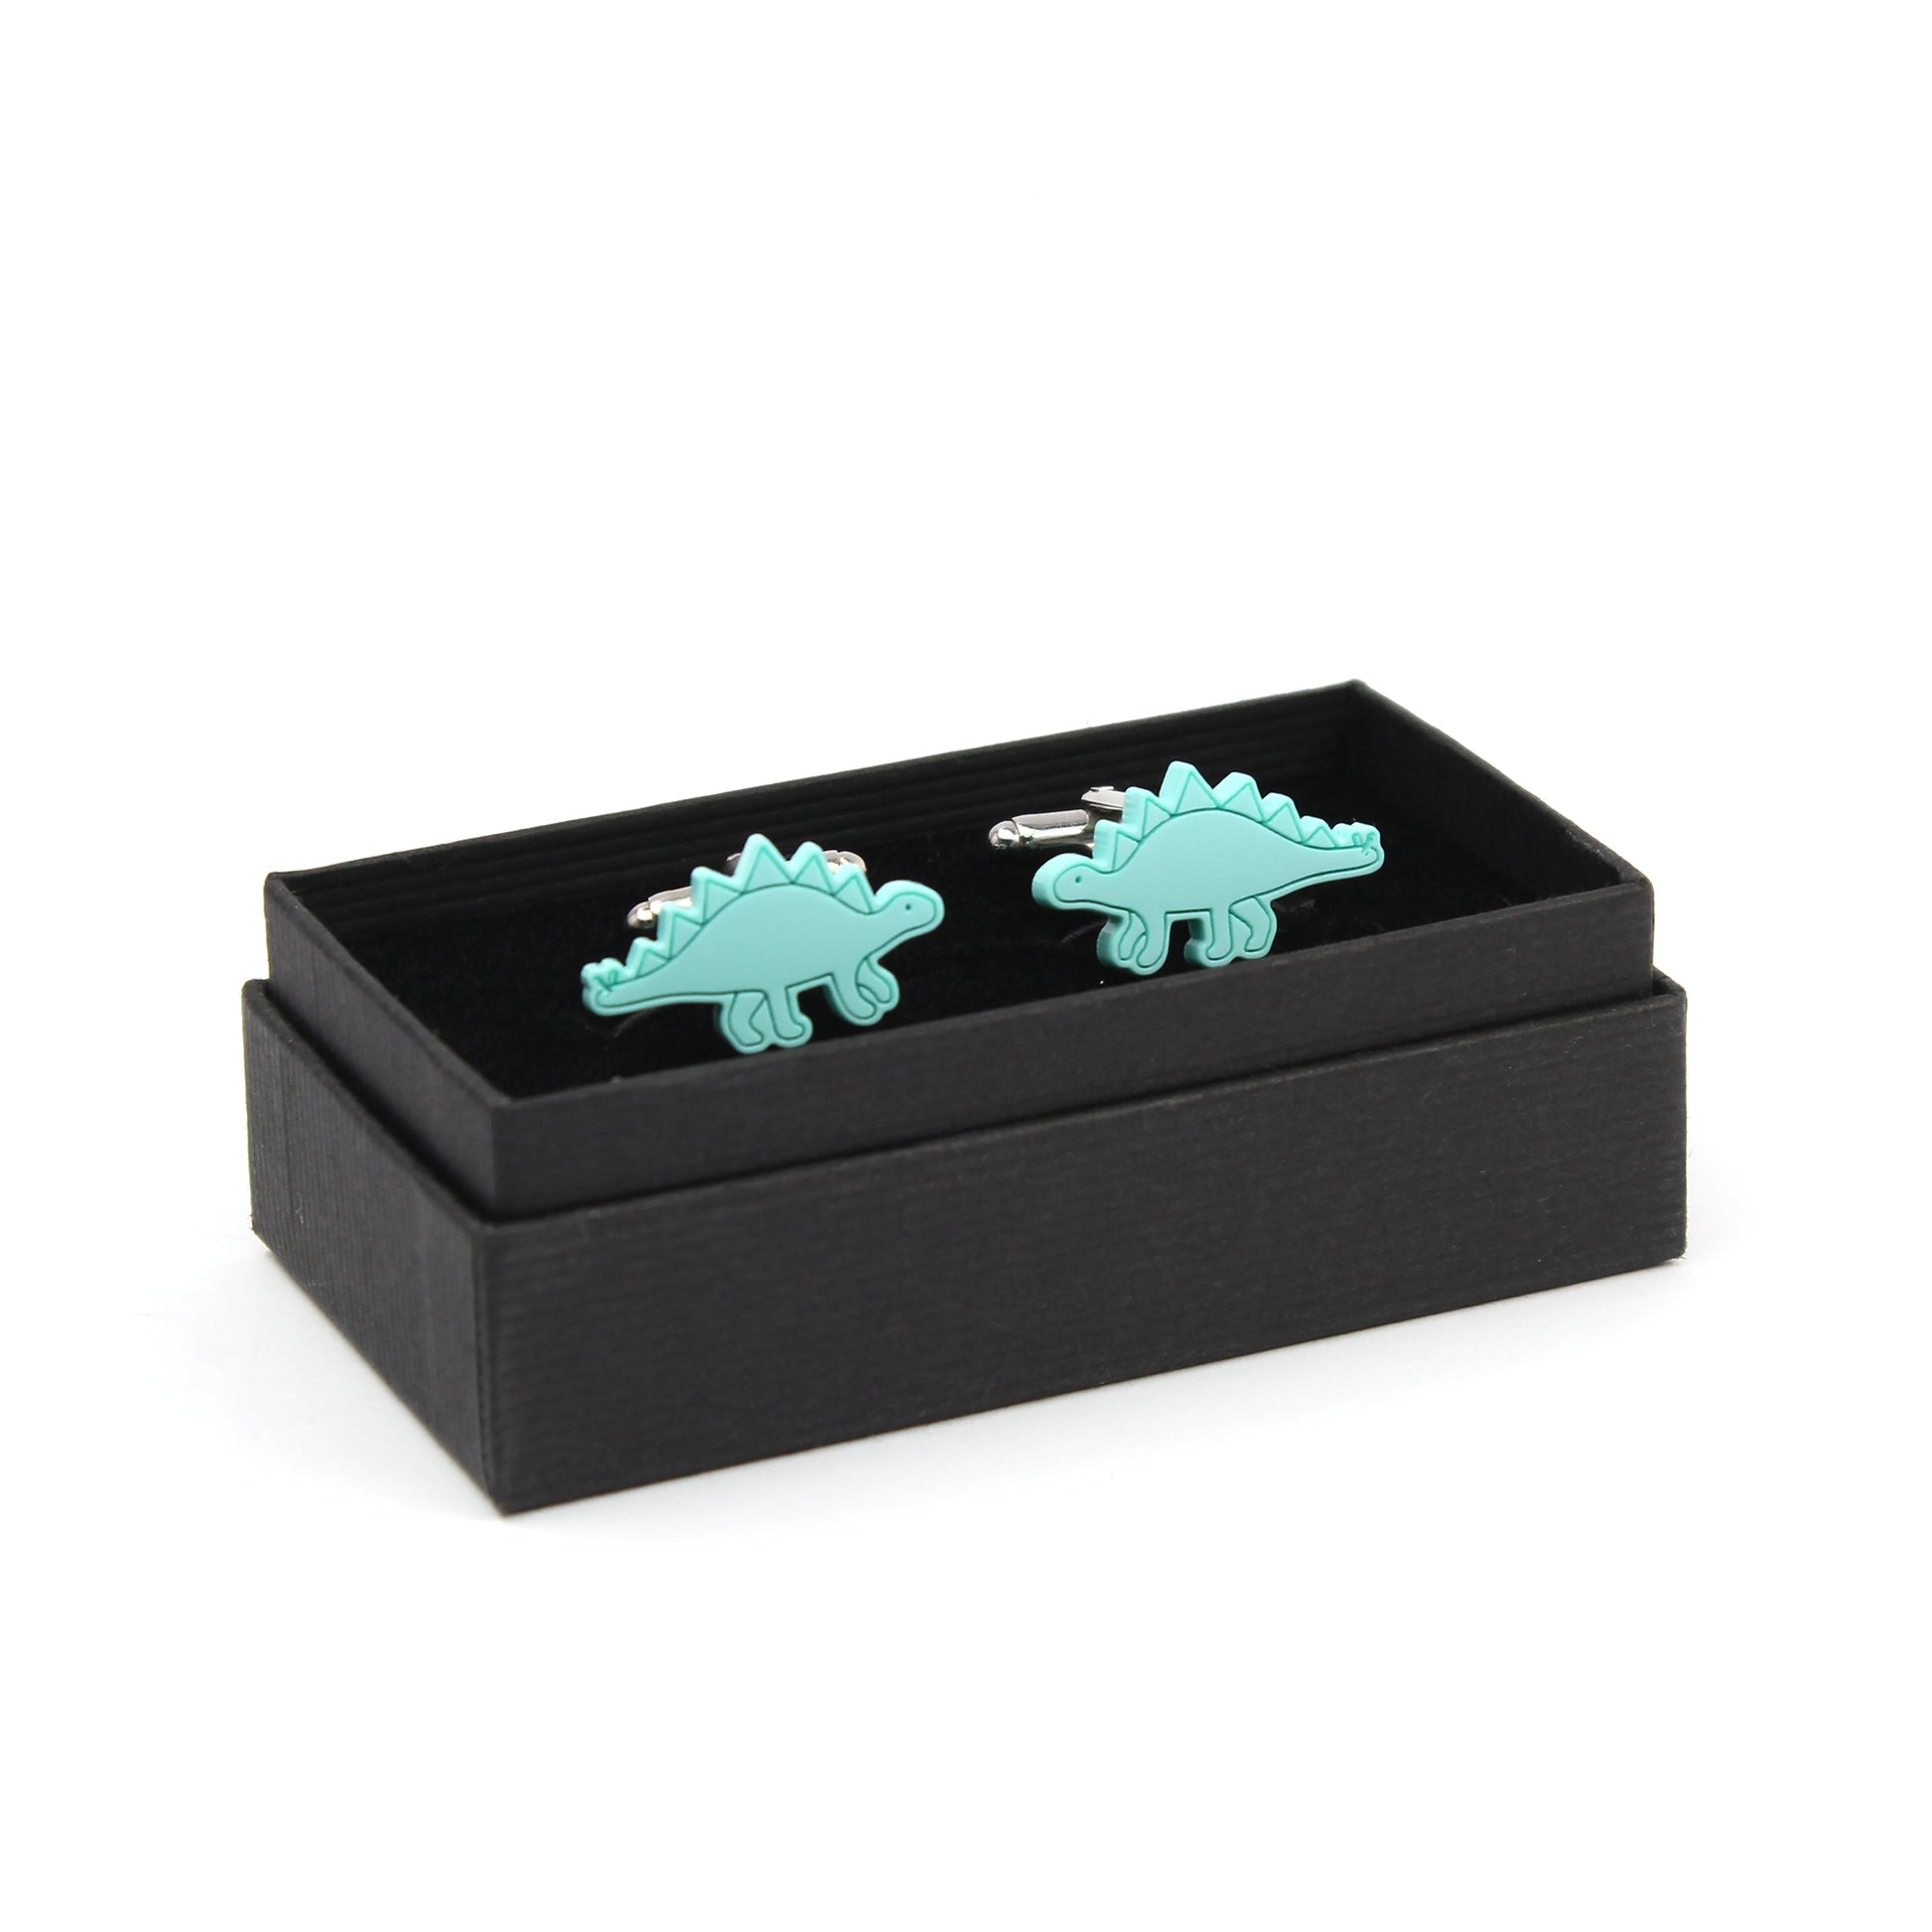 a pair of mint stegosaurus cufflinks in a black box